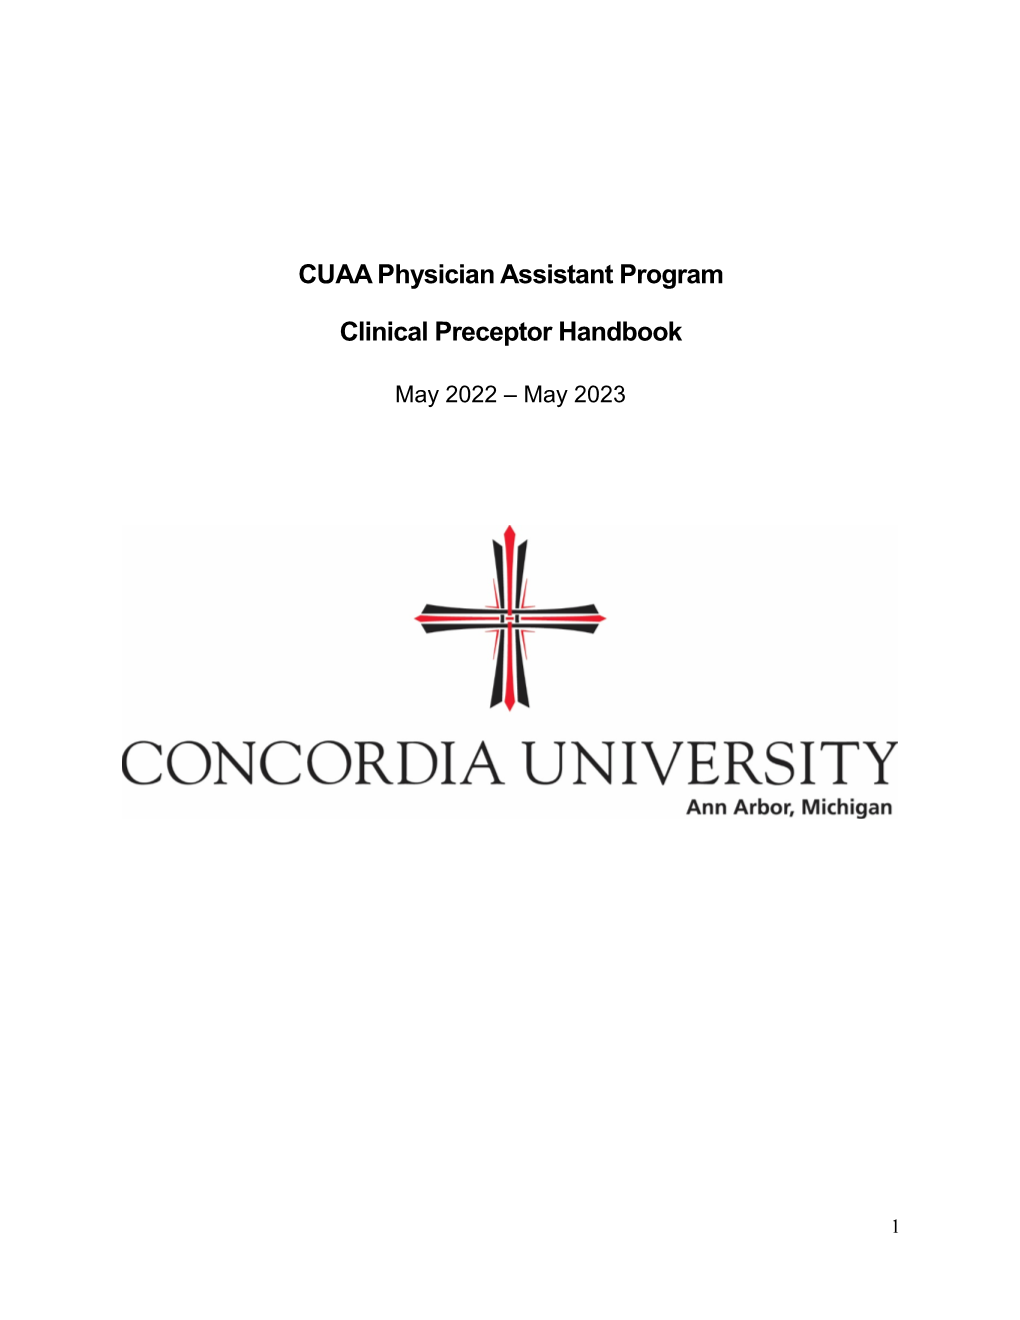 Clinical Preceptor Handbook Pediatrics 2022-2023